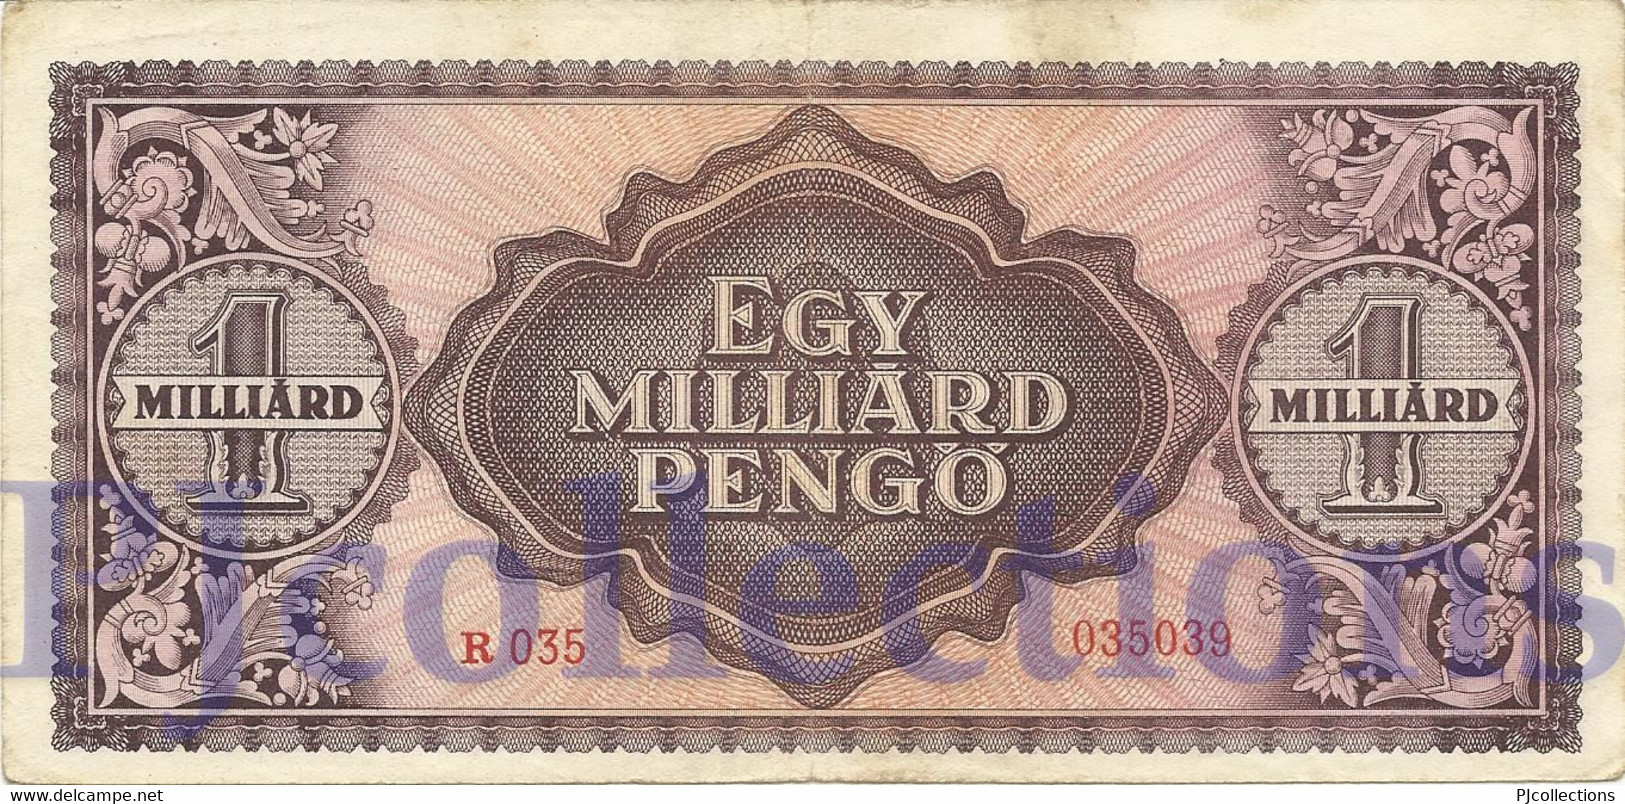 HUNGARY 1 MILLIARD PENGO 1946 PICK 125 AXF - Ungheria